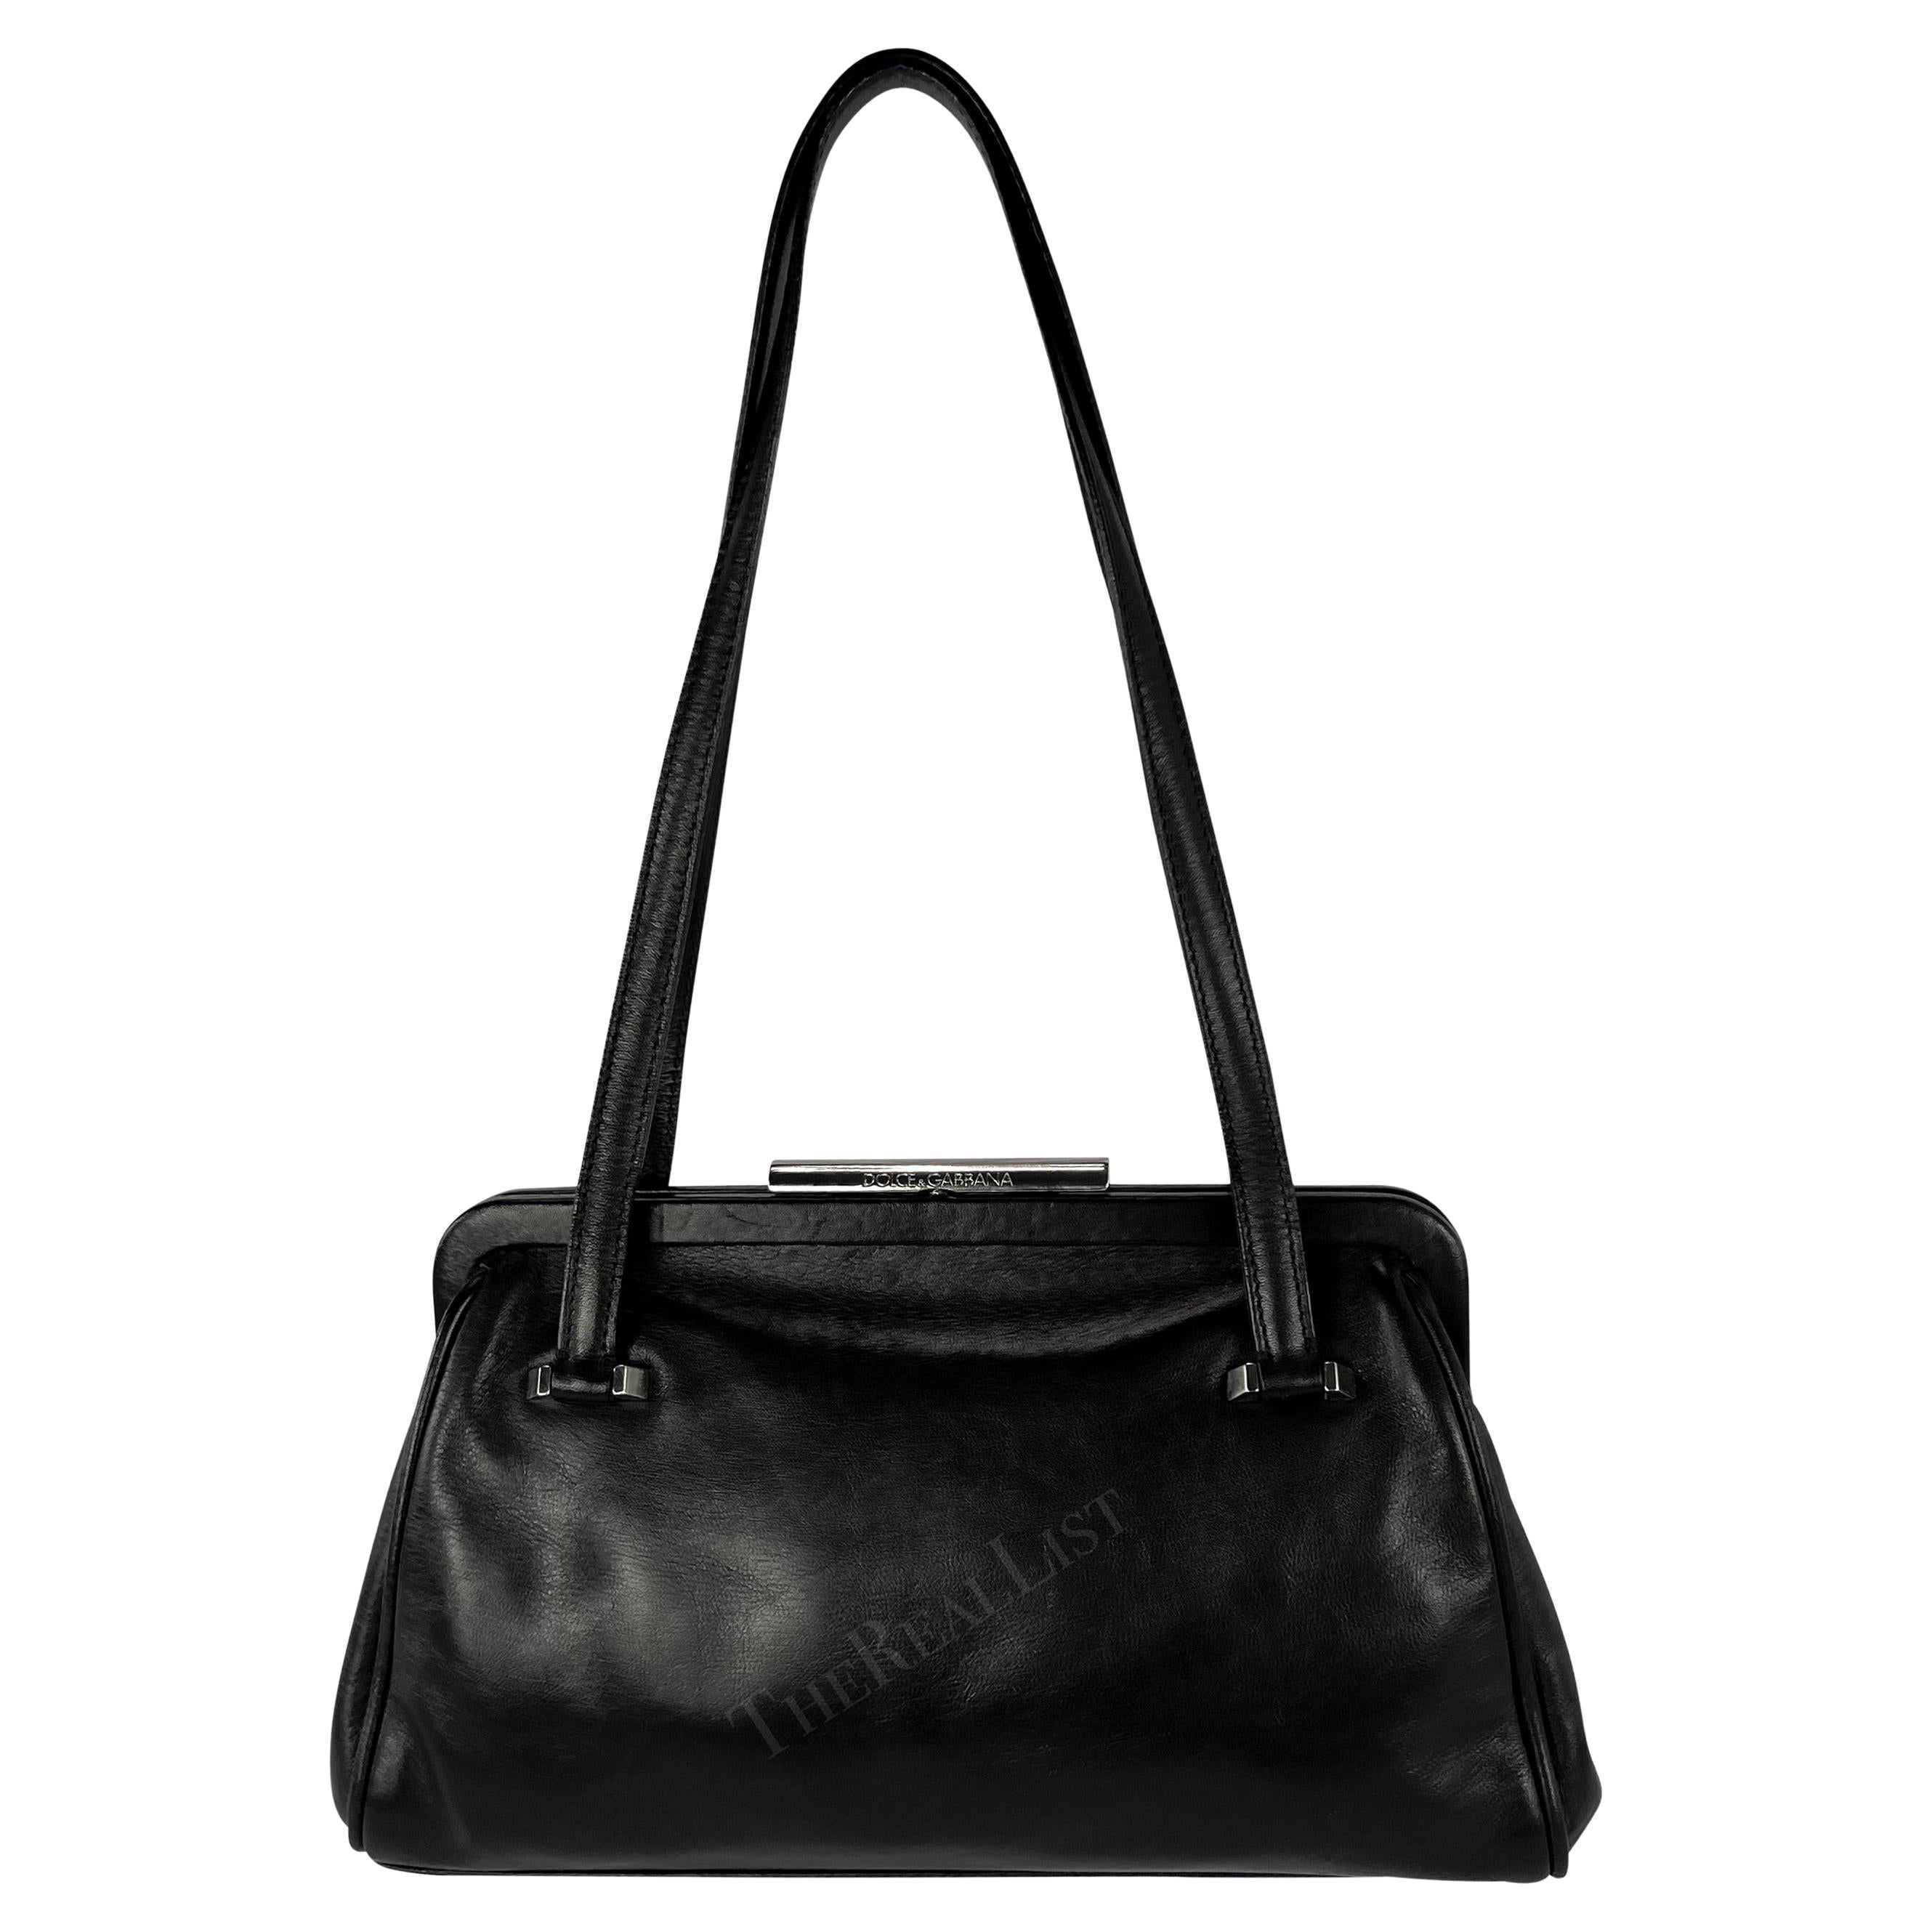 S/S 2003 Dolce & Gabbana 'Sex & Love' Black Leather Mini Shoulder Bag For Sale